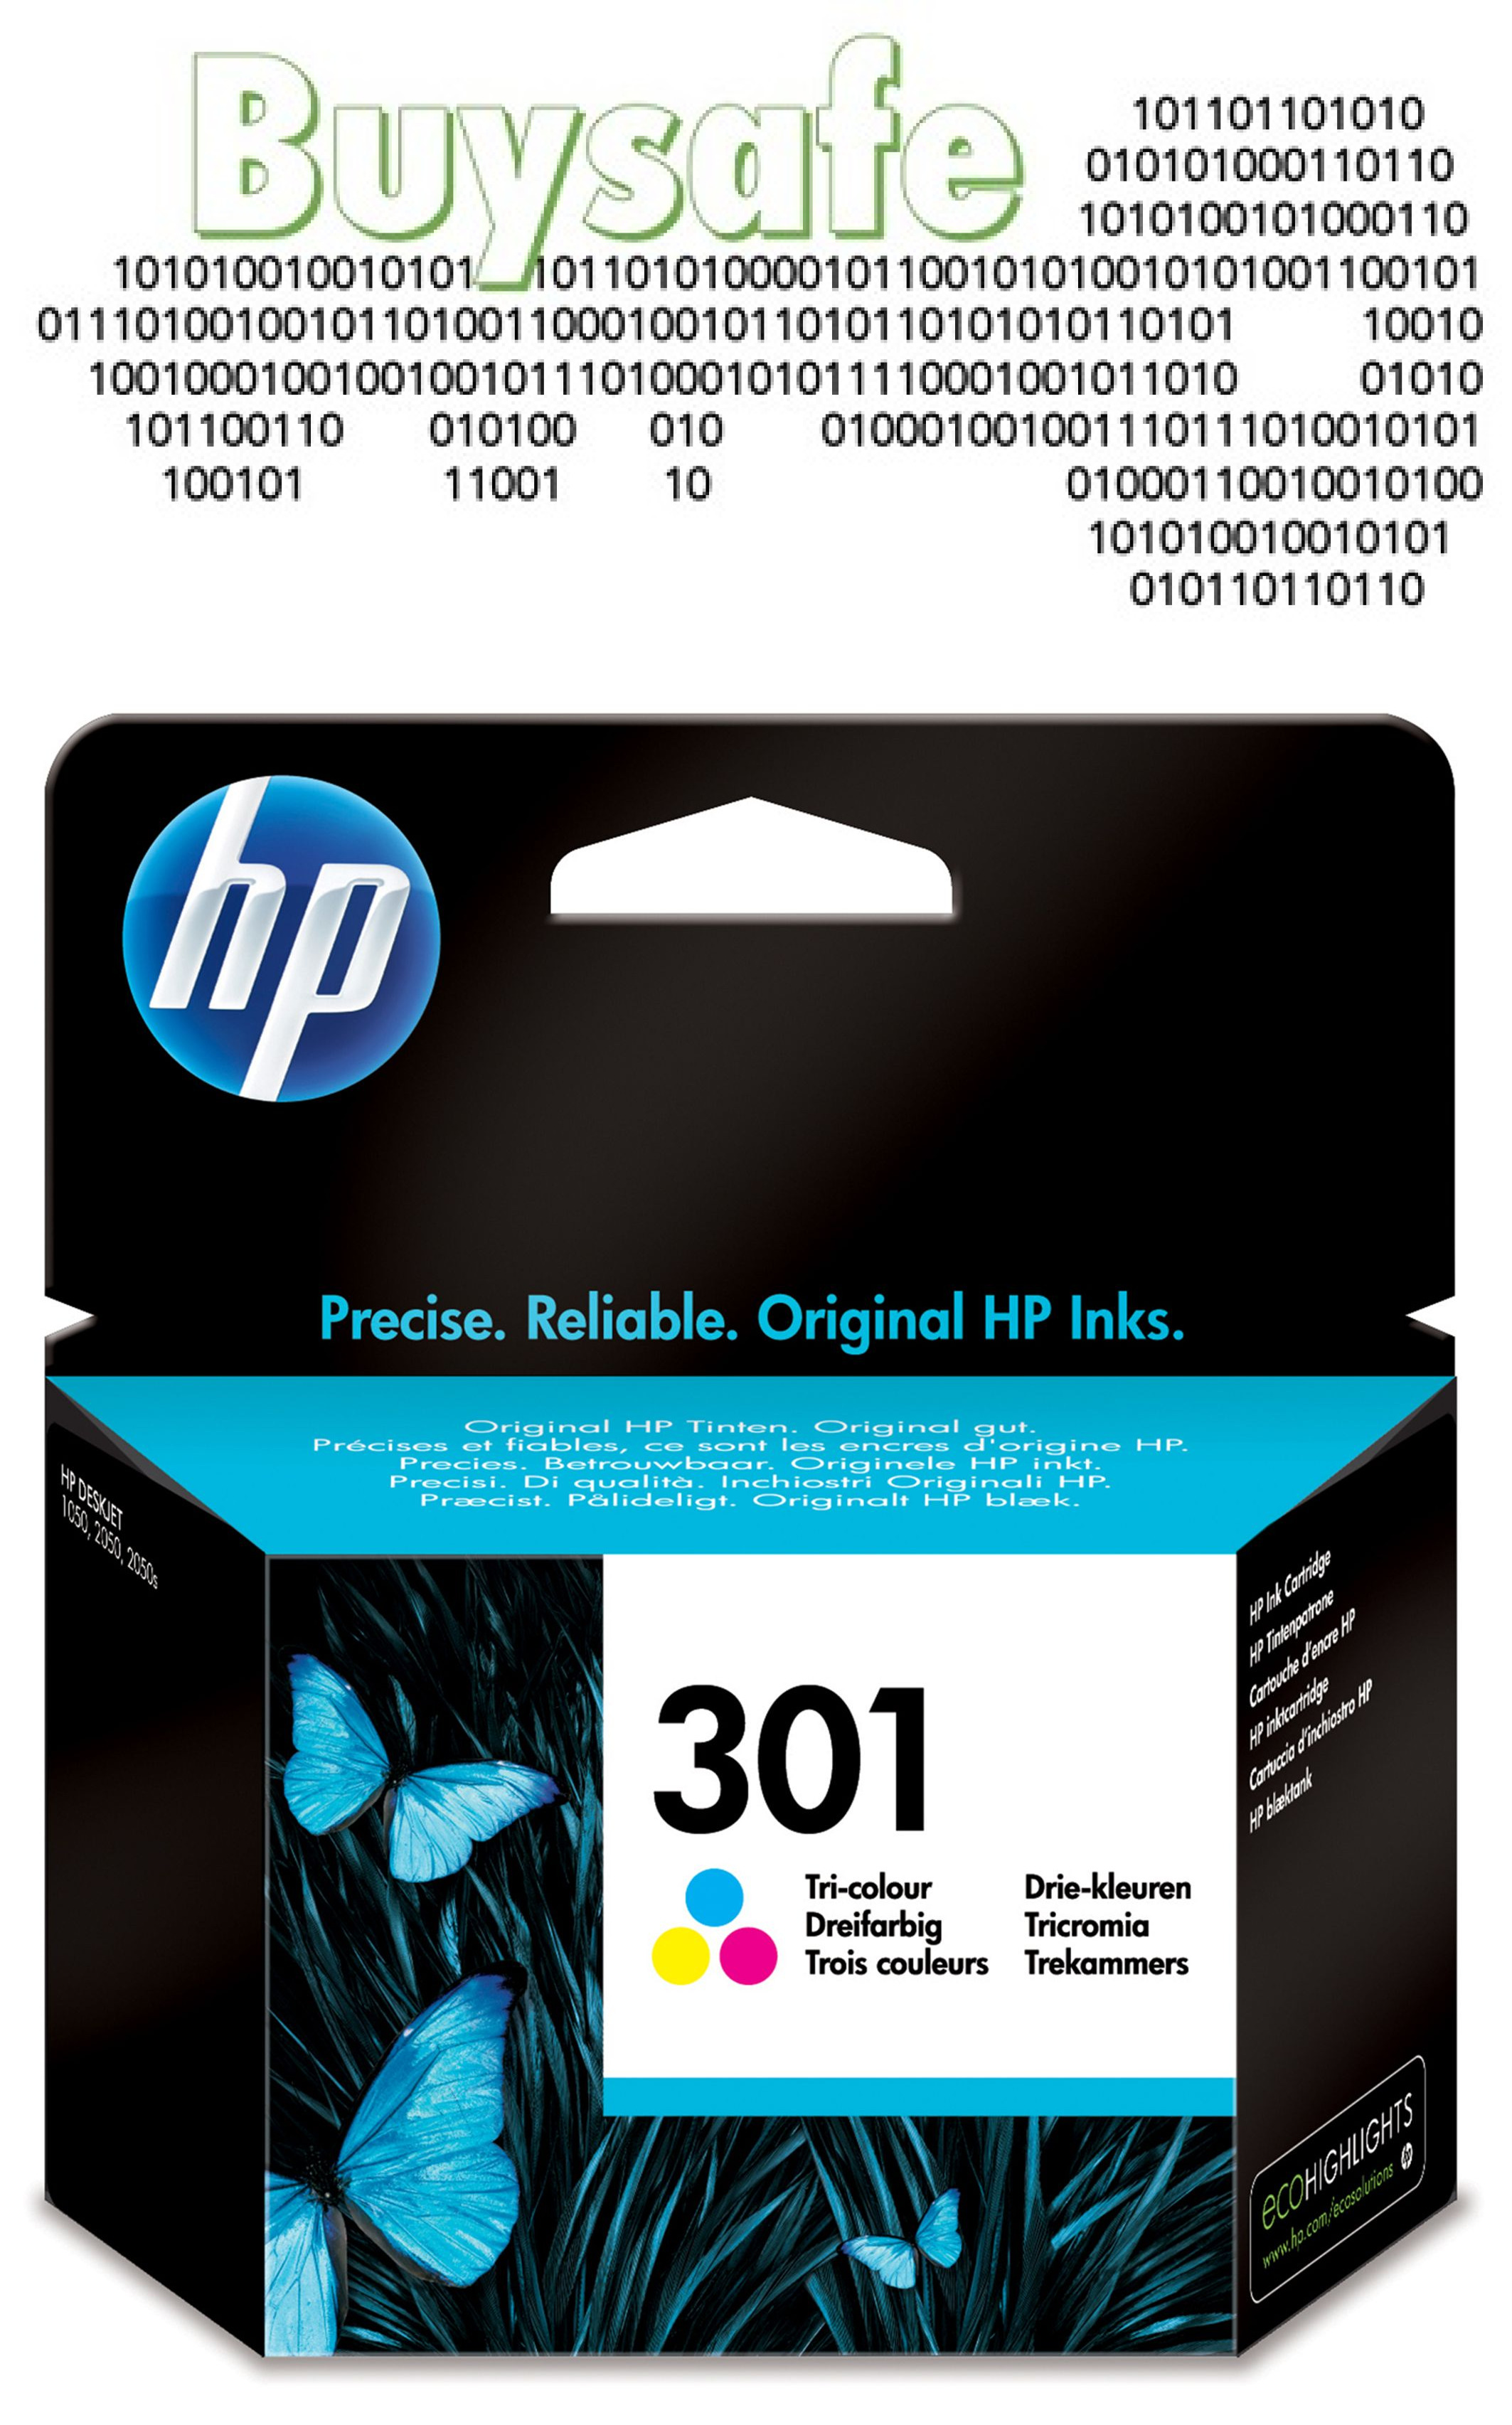 HP ENVY 5530 printer ink | eBay